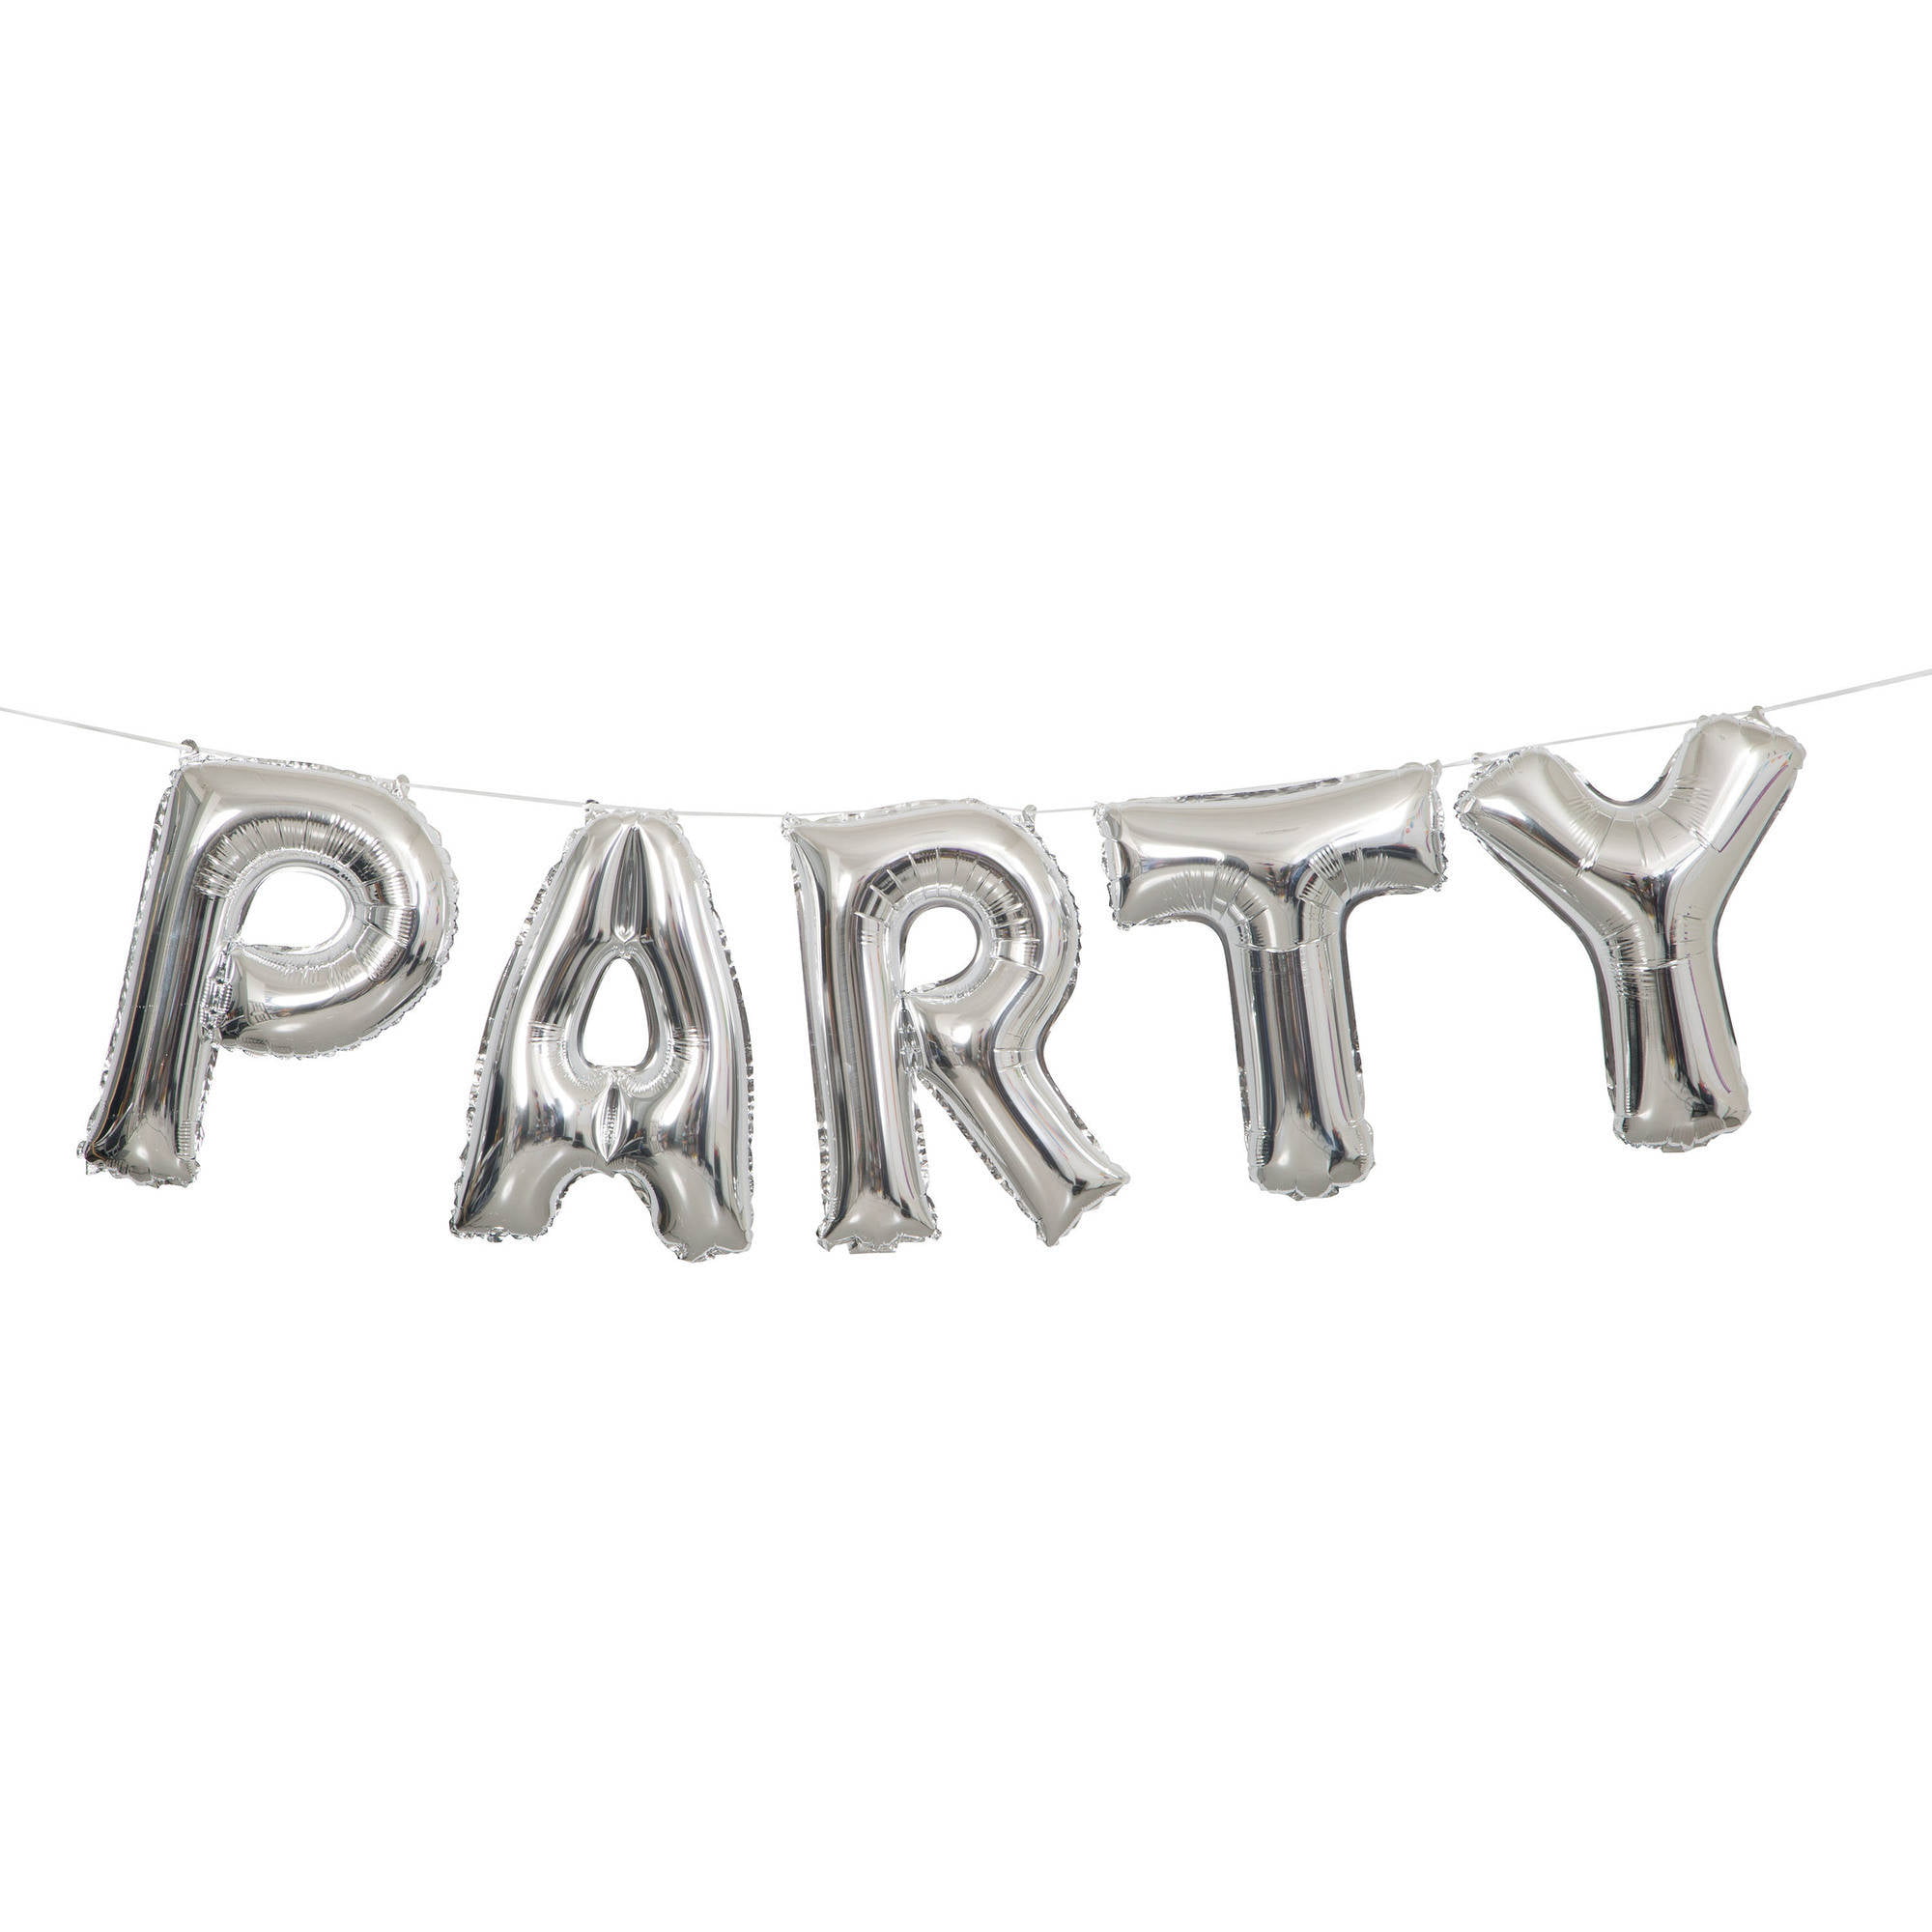 Foil Silver Party Letter Balloon Banner Kit